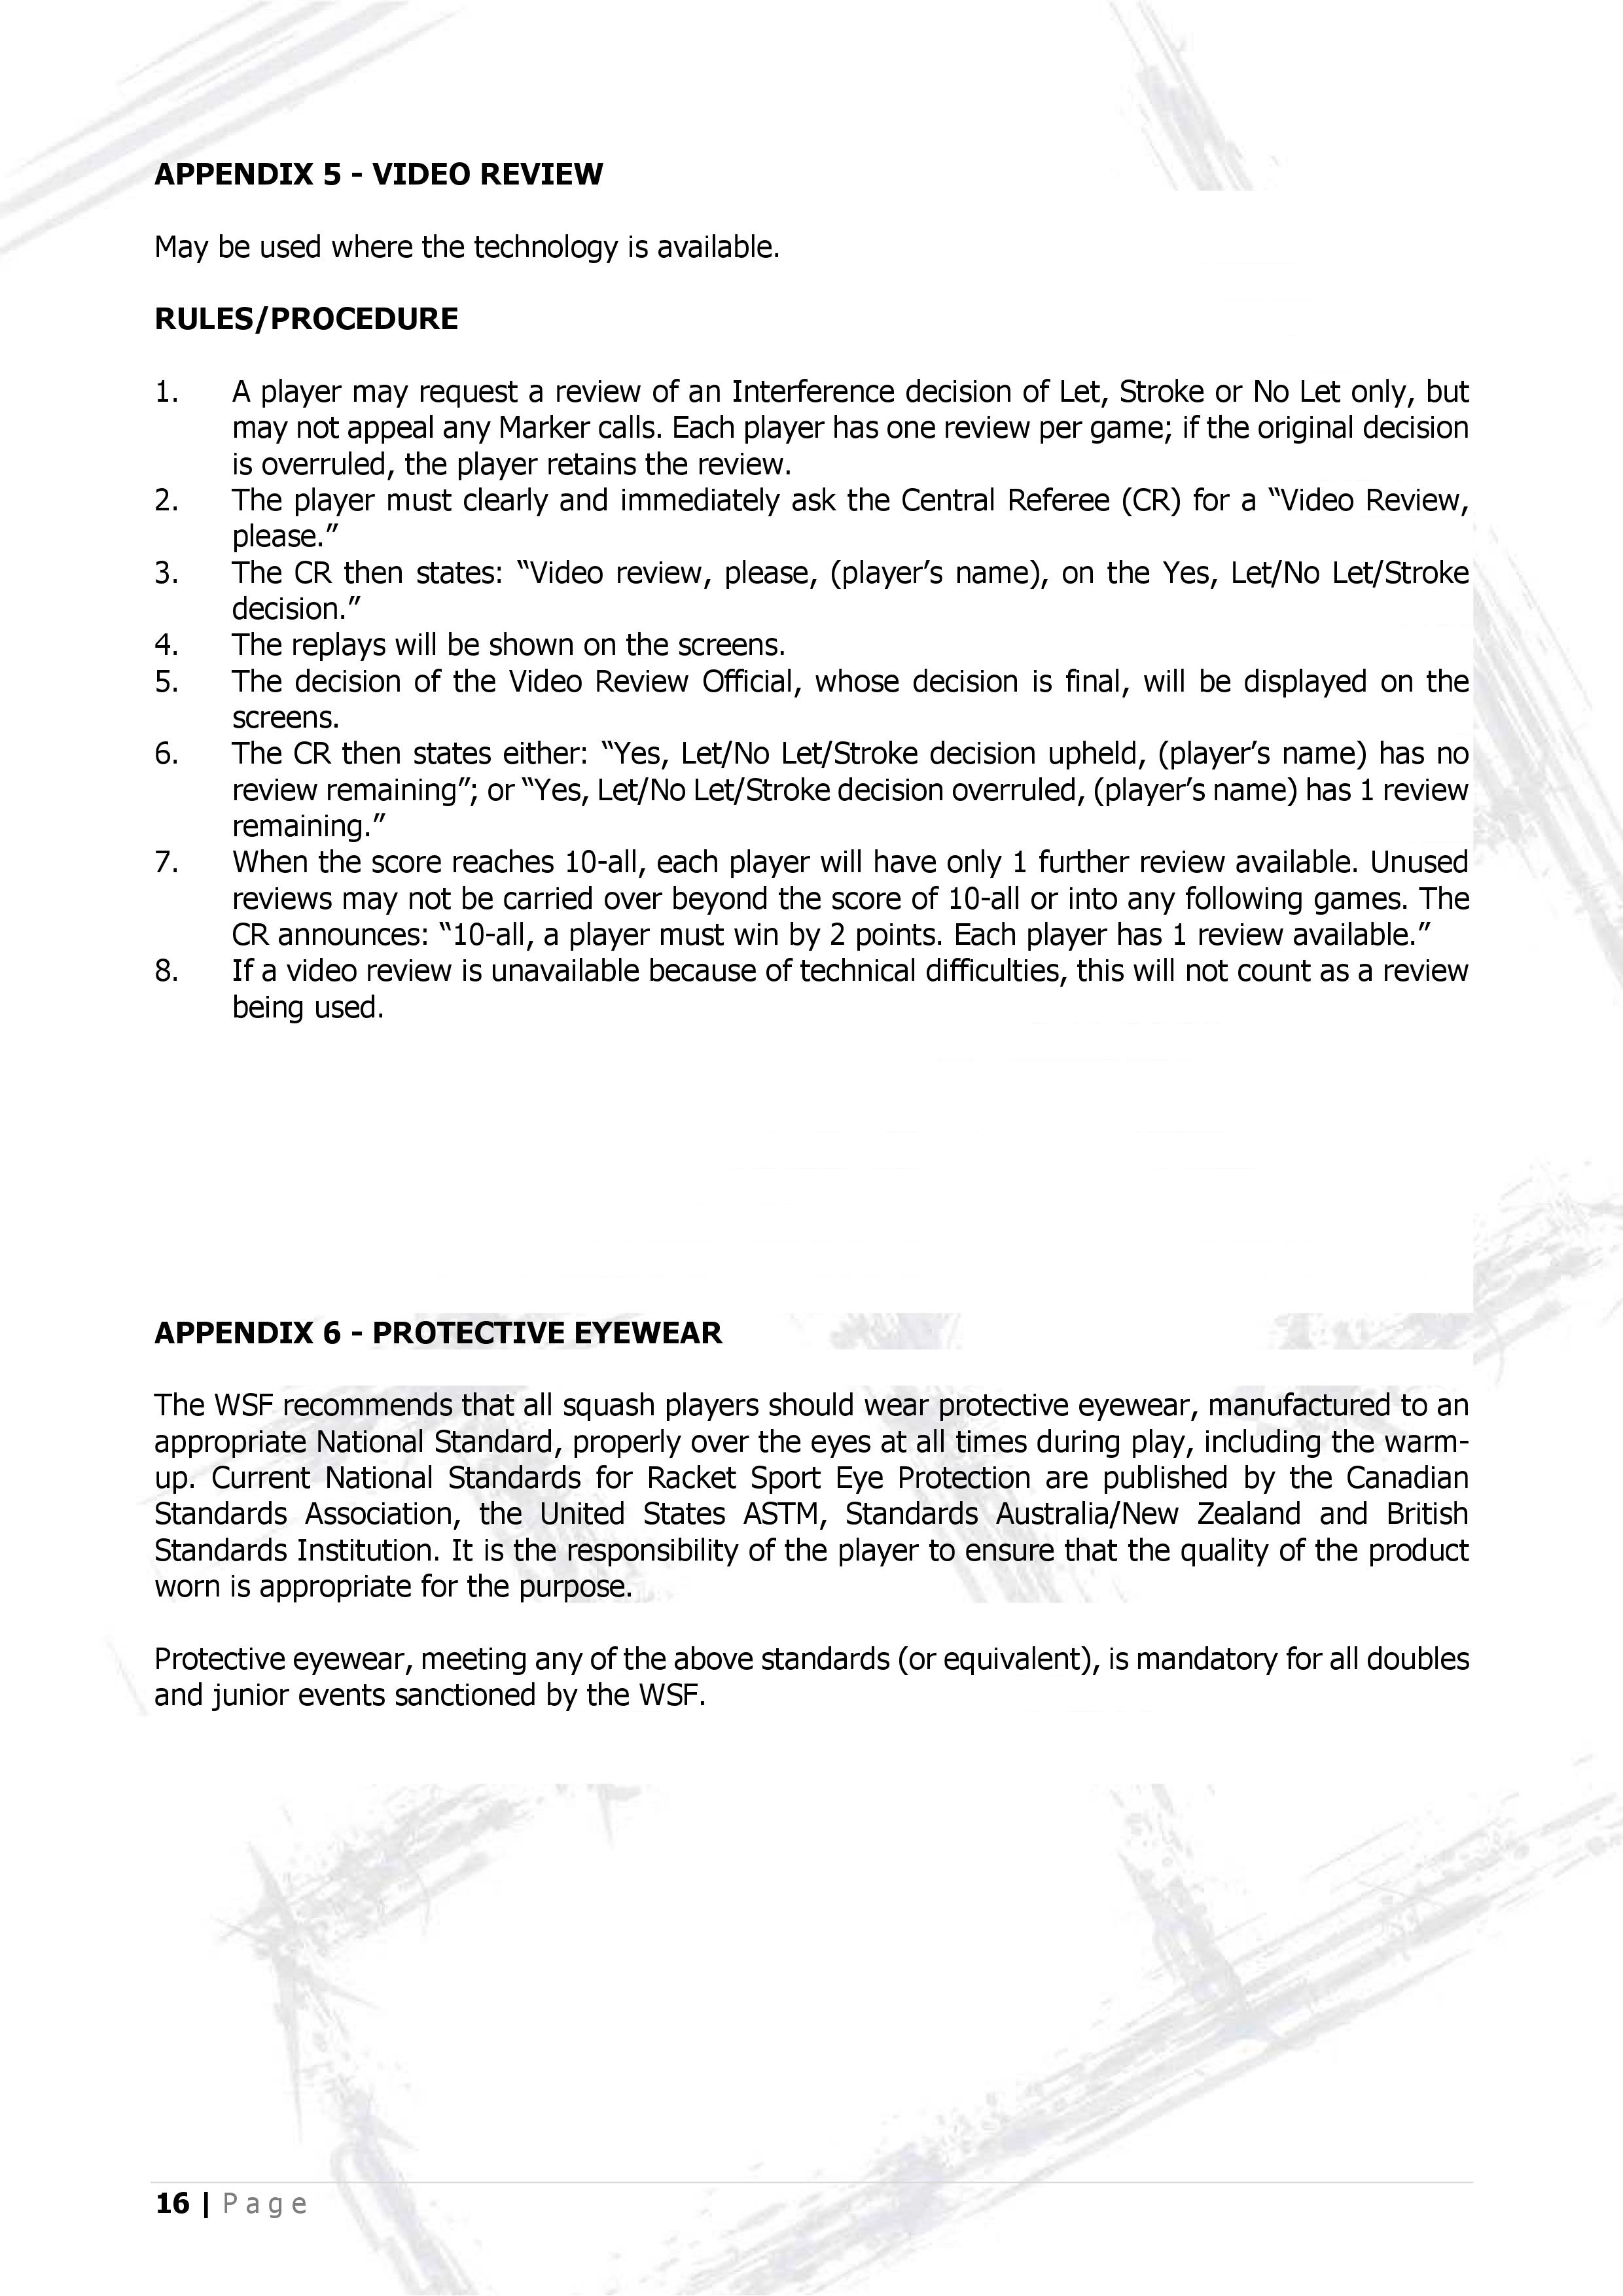 World Squash Federation Rules - Global Squash Coach - Page 18.jpg